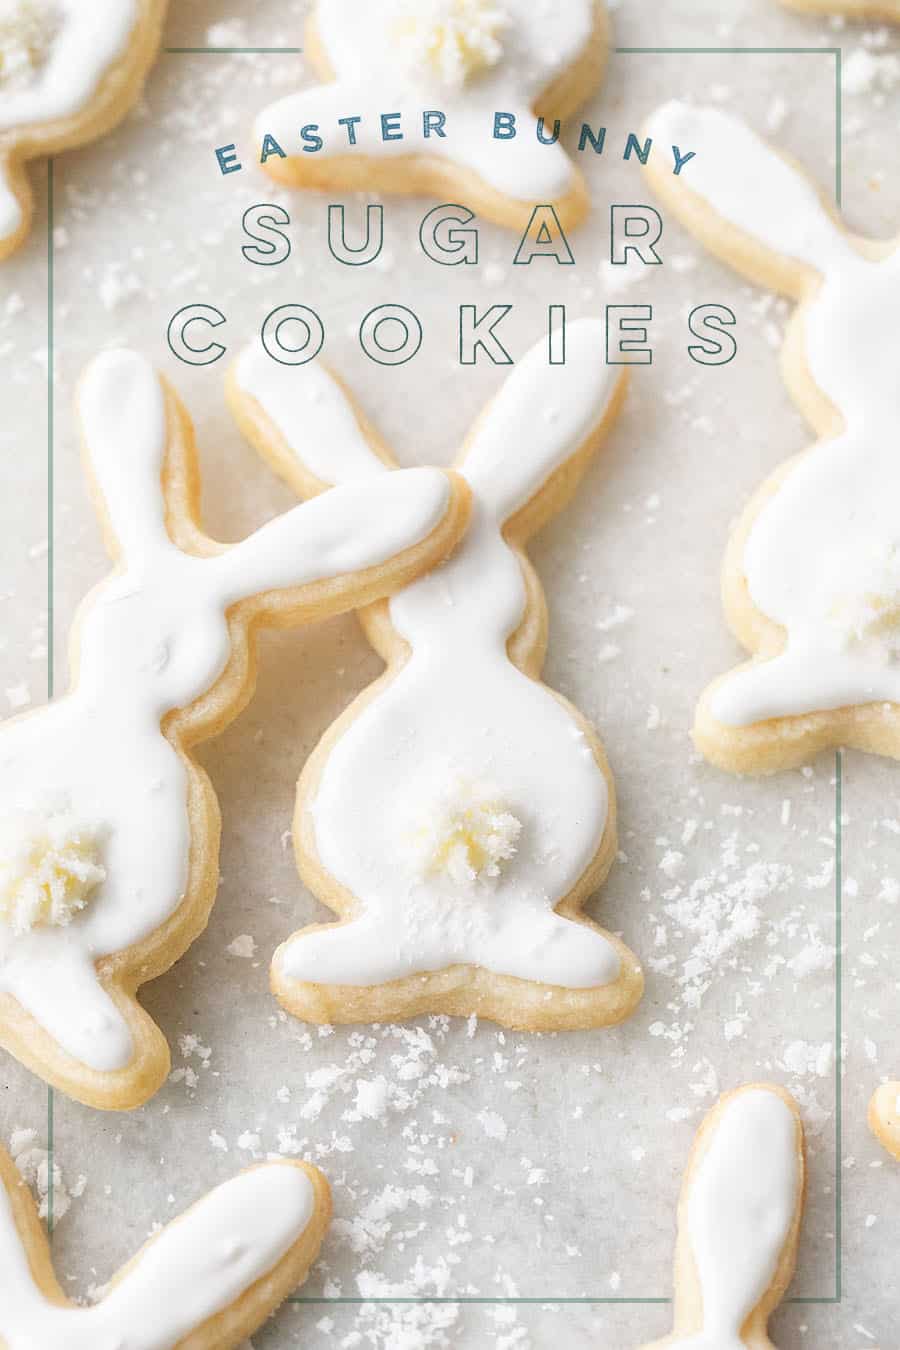 Bunny Sugar Cookies Title Image